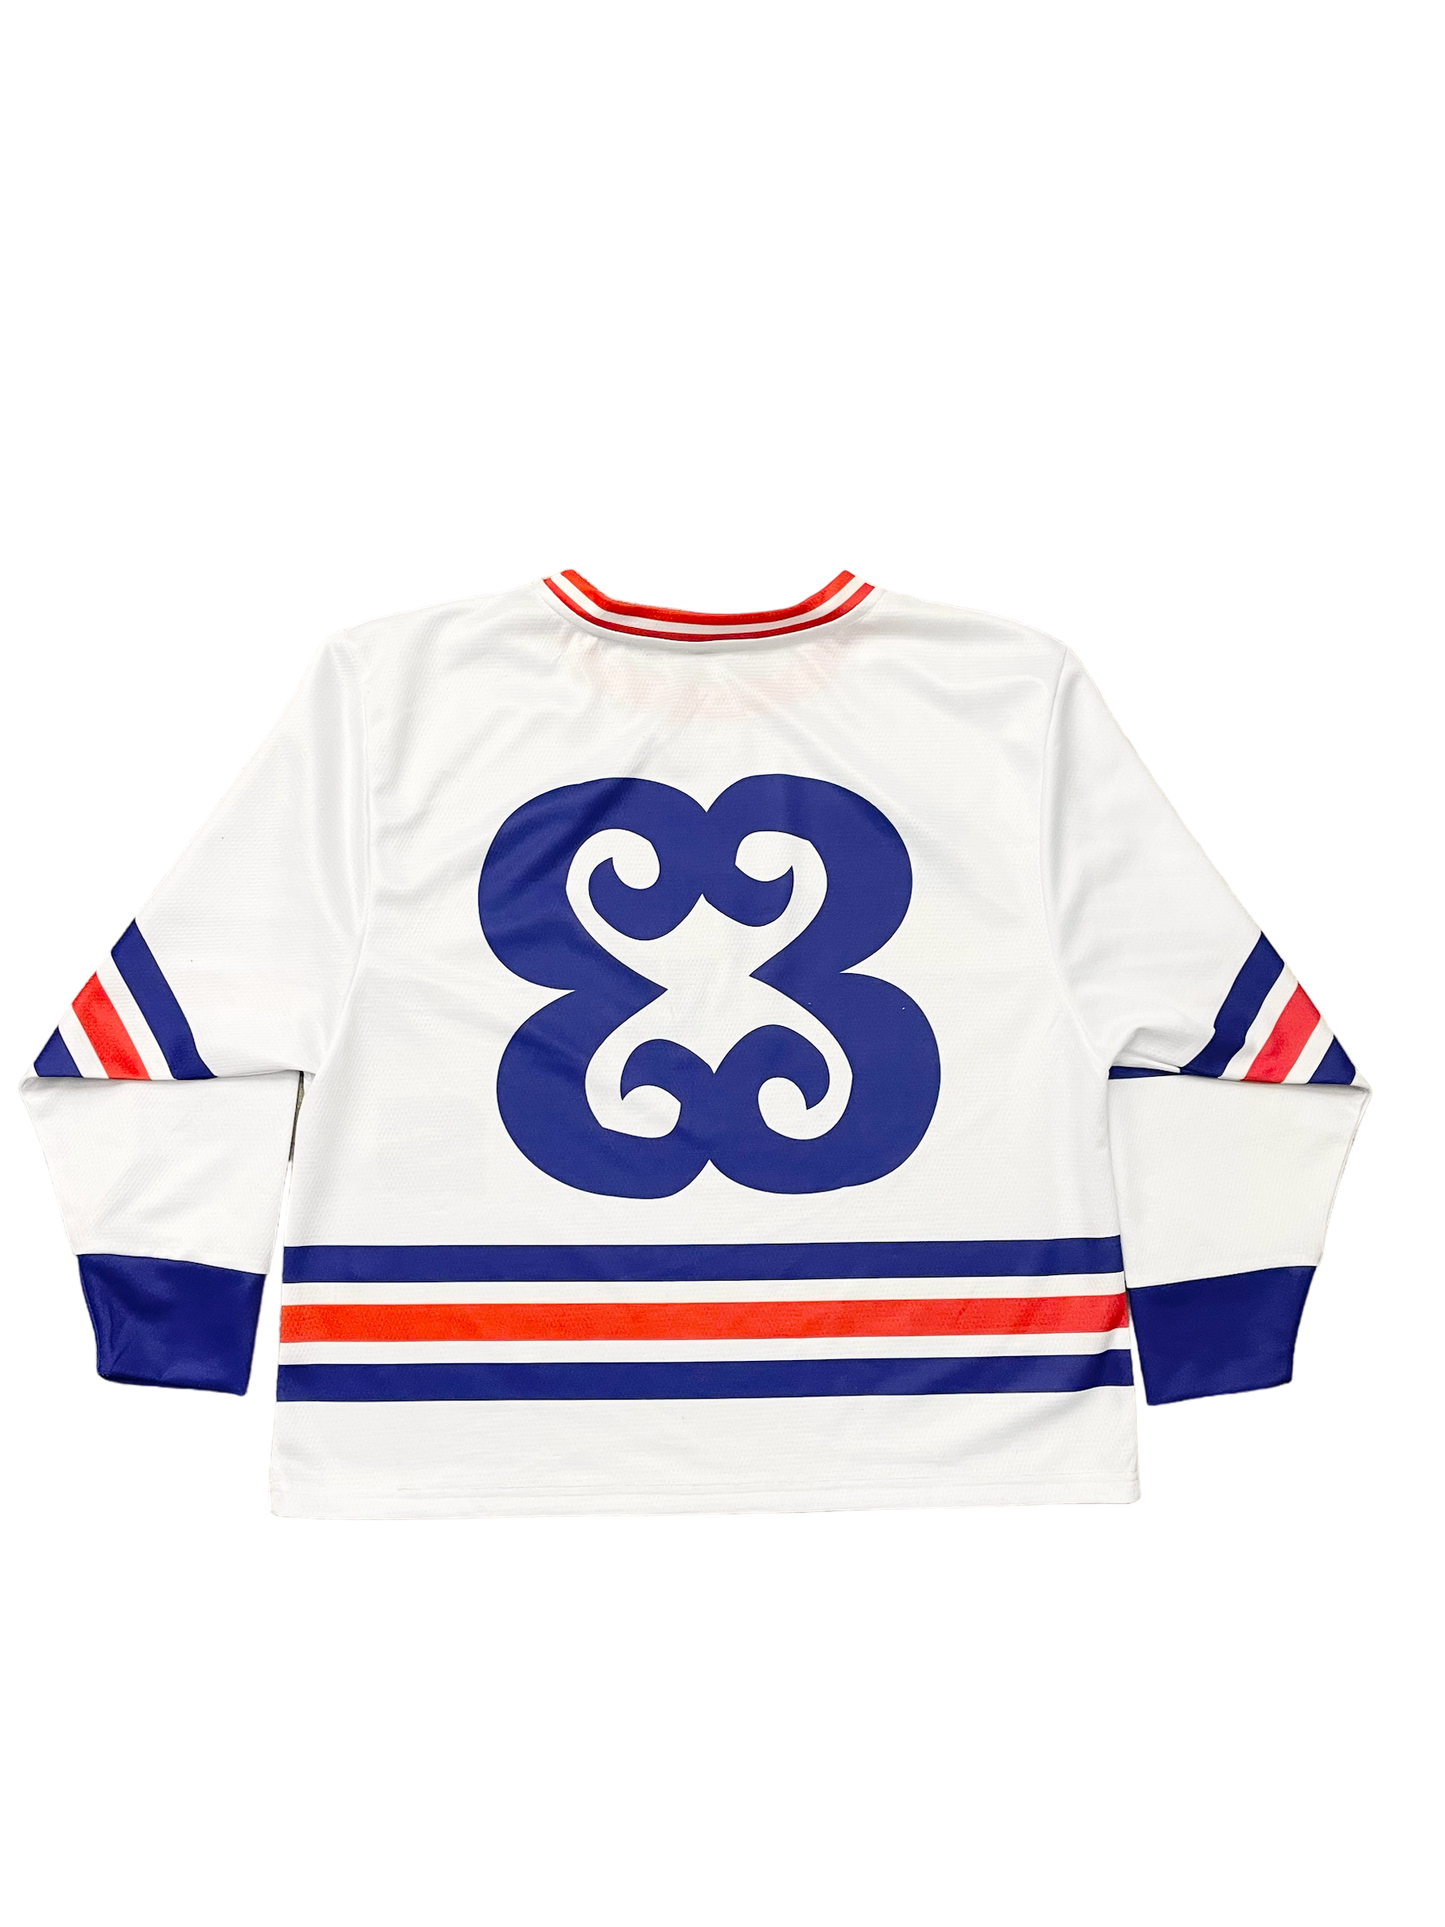 Big nouss logo hockey jersey